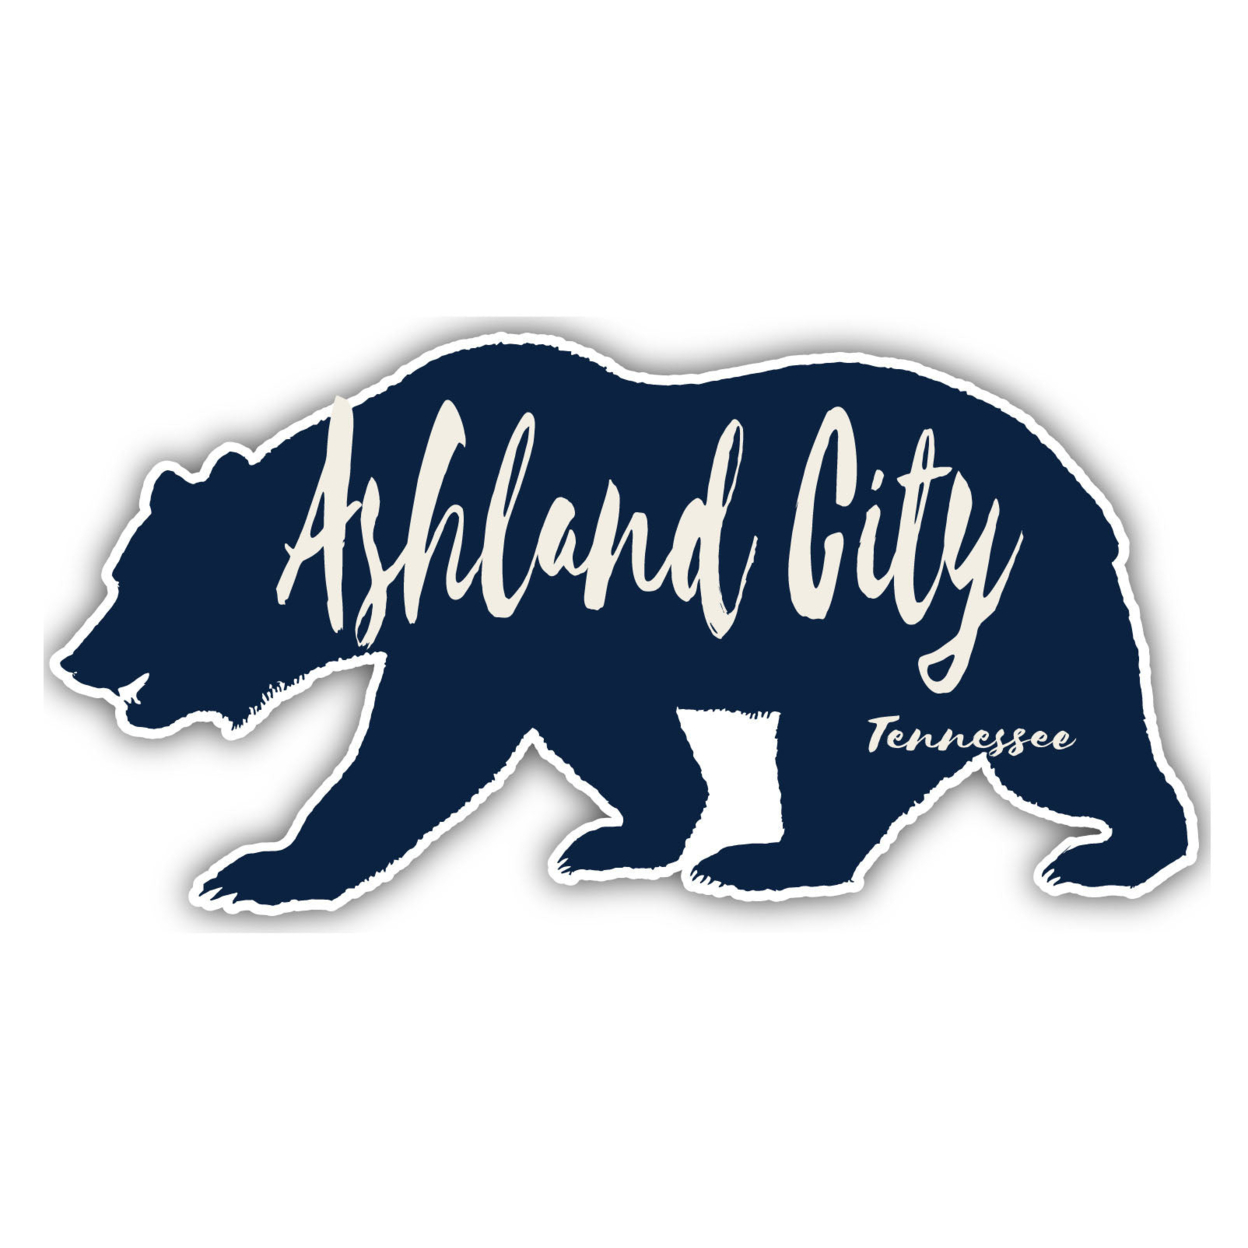 Ashland City Tennessee Souvenir Decorative Stickers (Choose Theme And Size) - Single Unit, 2-Inch, Bear